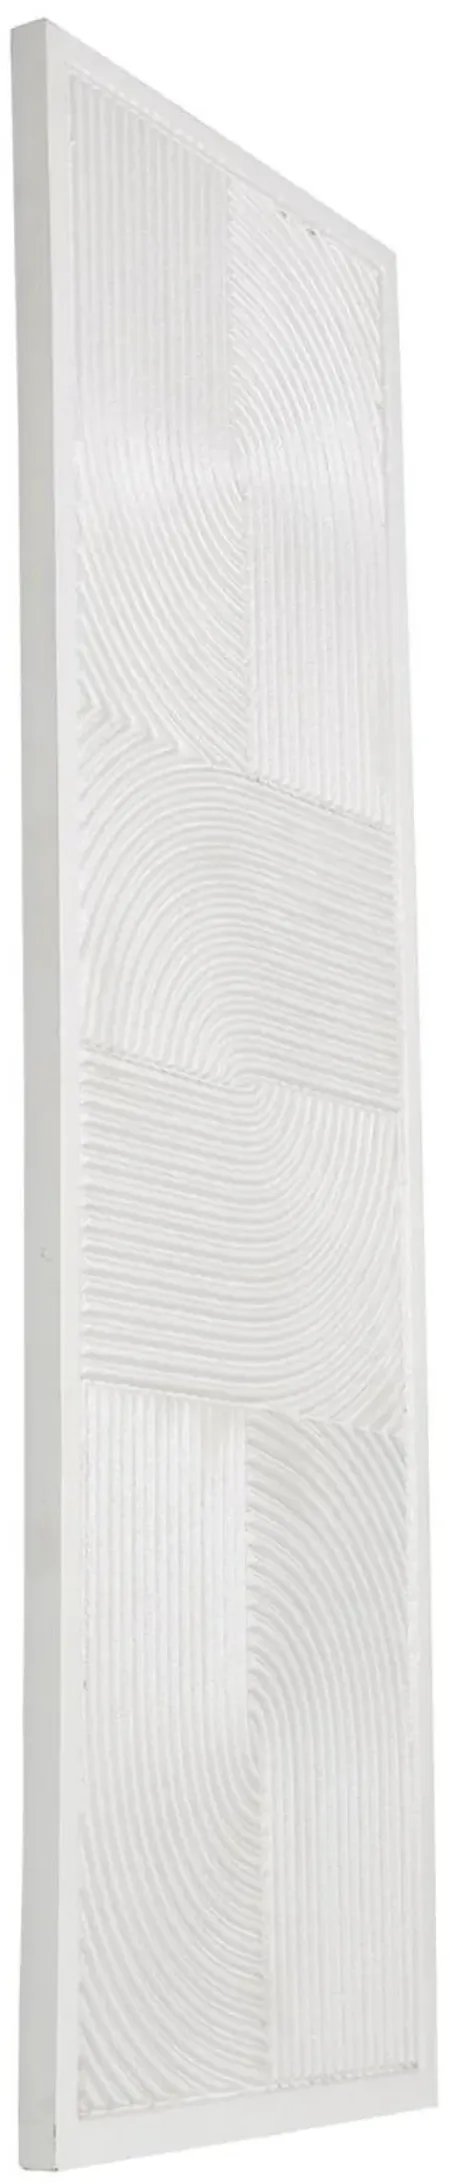 White Wood Wall Panel Decor 16"W x 48"H